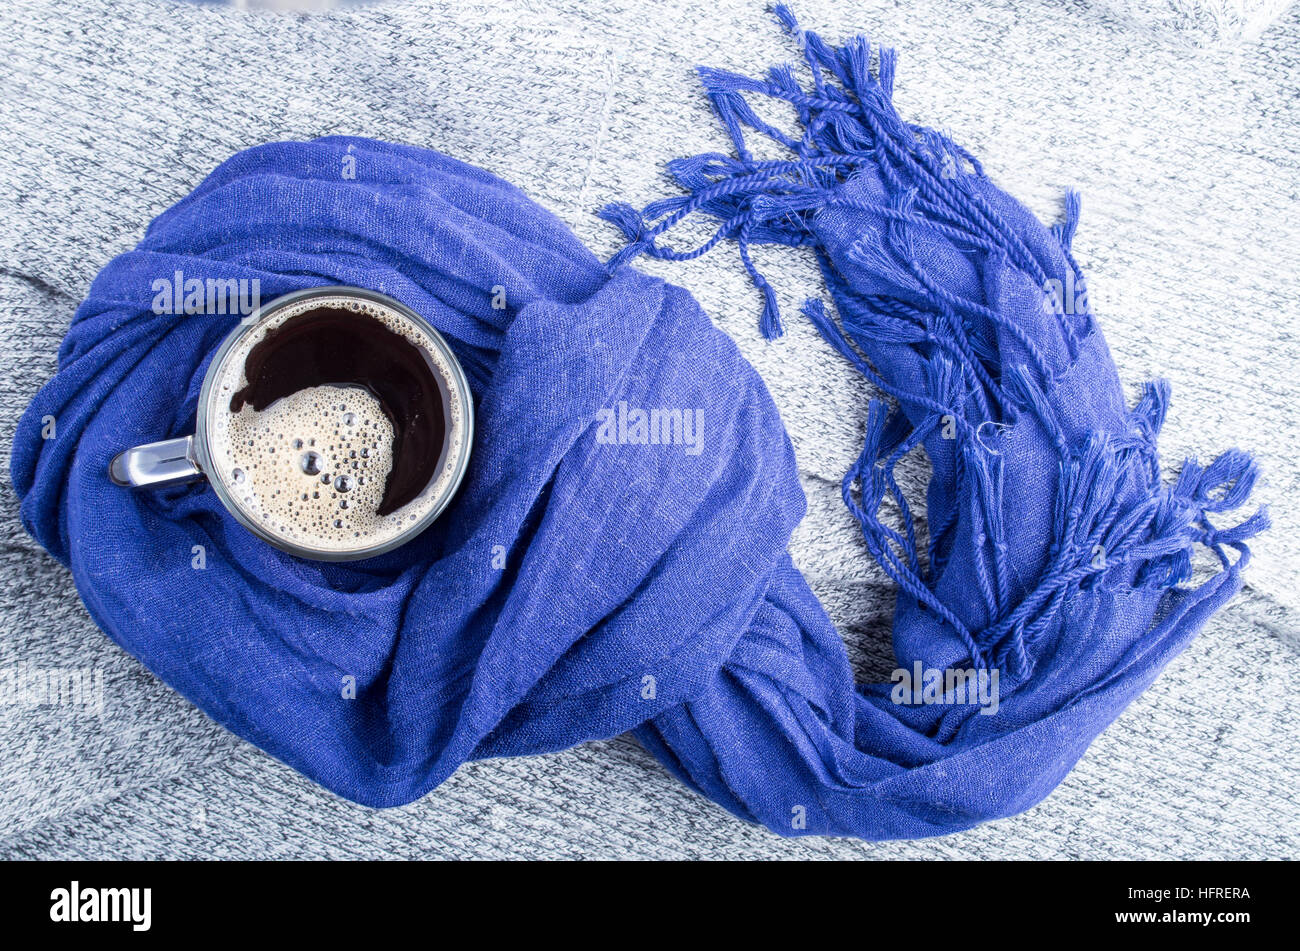 Algodón azul pañuelo atado en un nudo alrededor de la taza de café caliente sobre un fondo gris Foto de stock